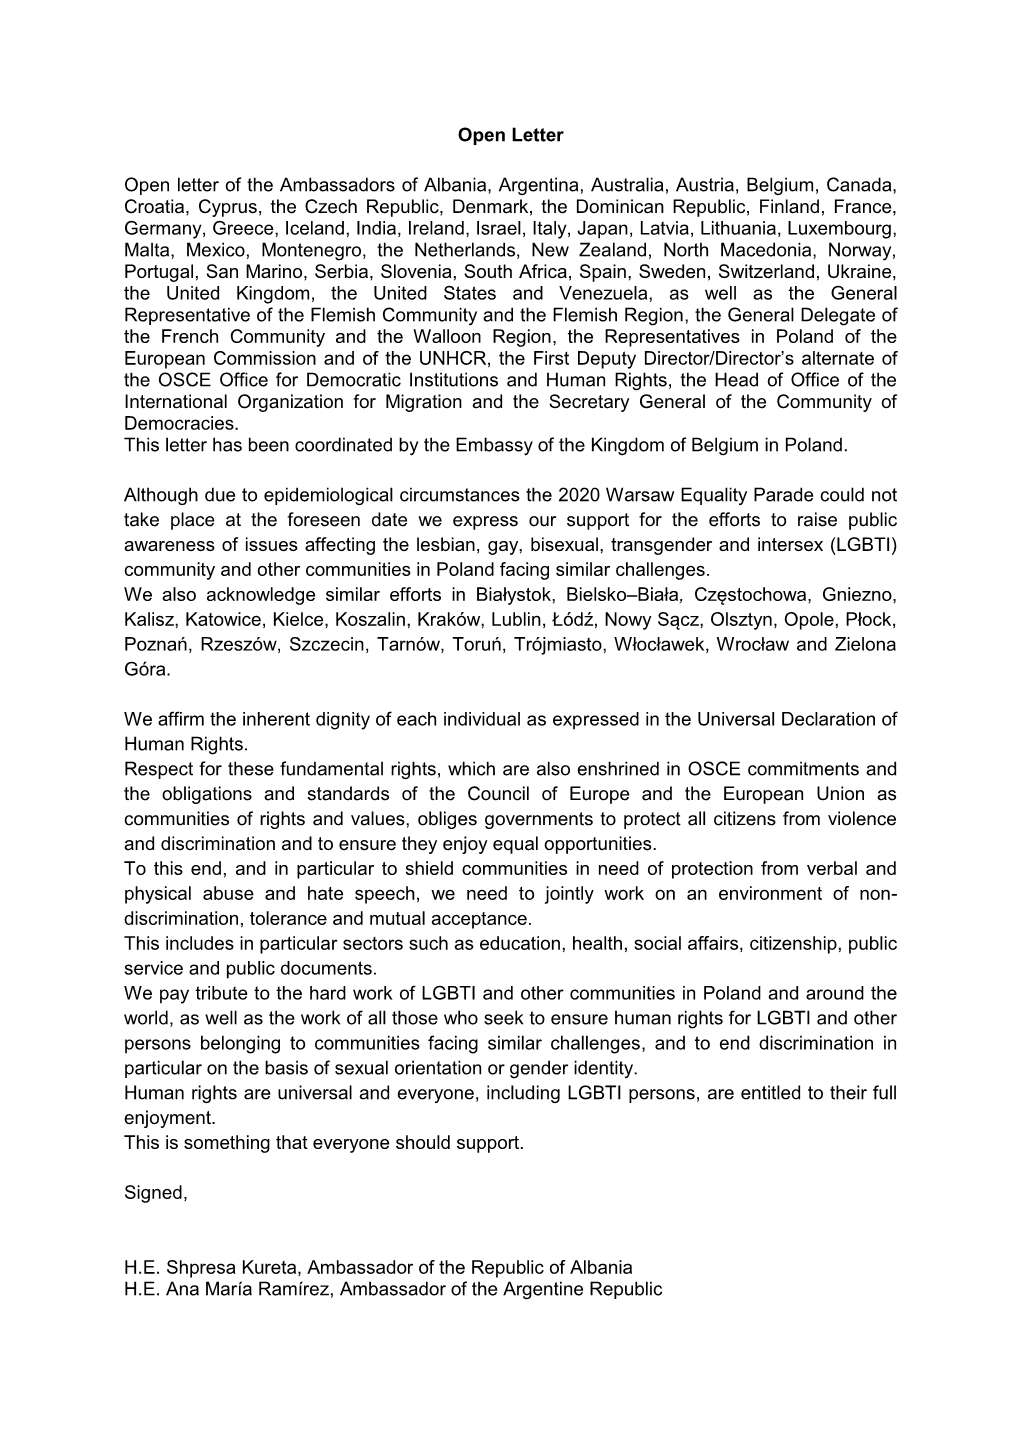 Open Letter Open Letter of the Ambassadors of Albania, Argentina, Australia, Austria, Belgium, Canada, Croatia, Cyprus, the Czec